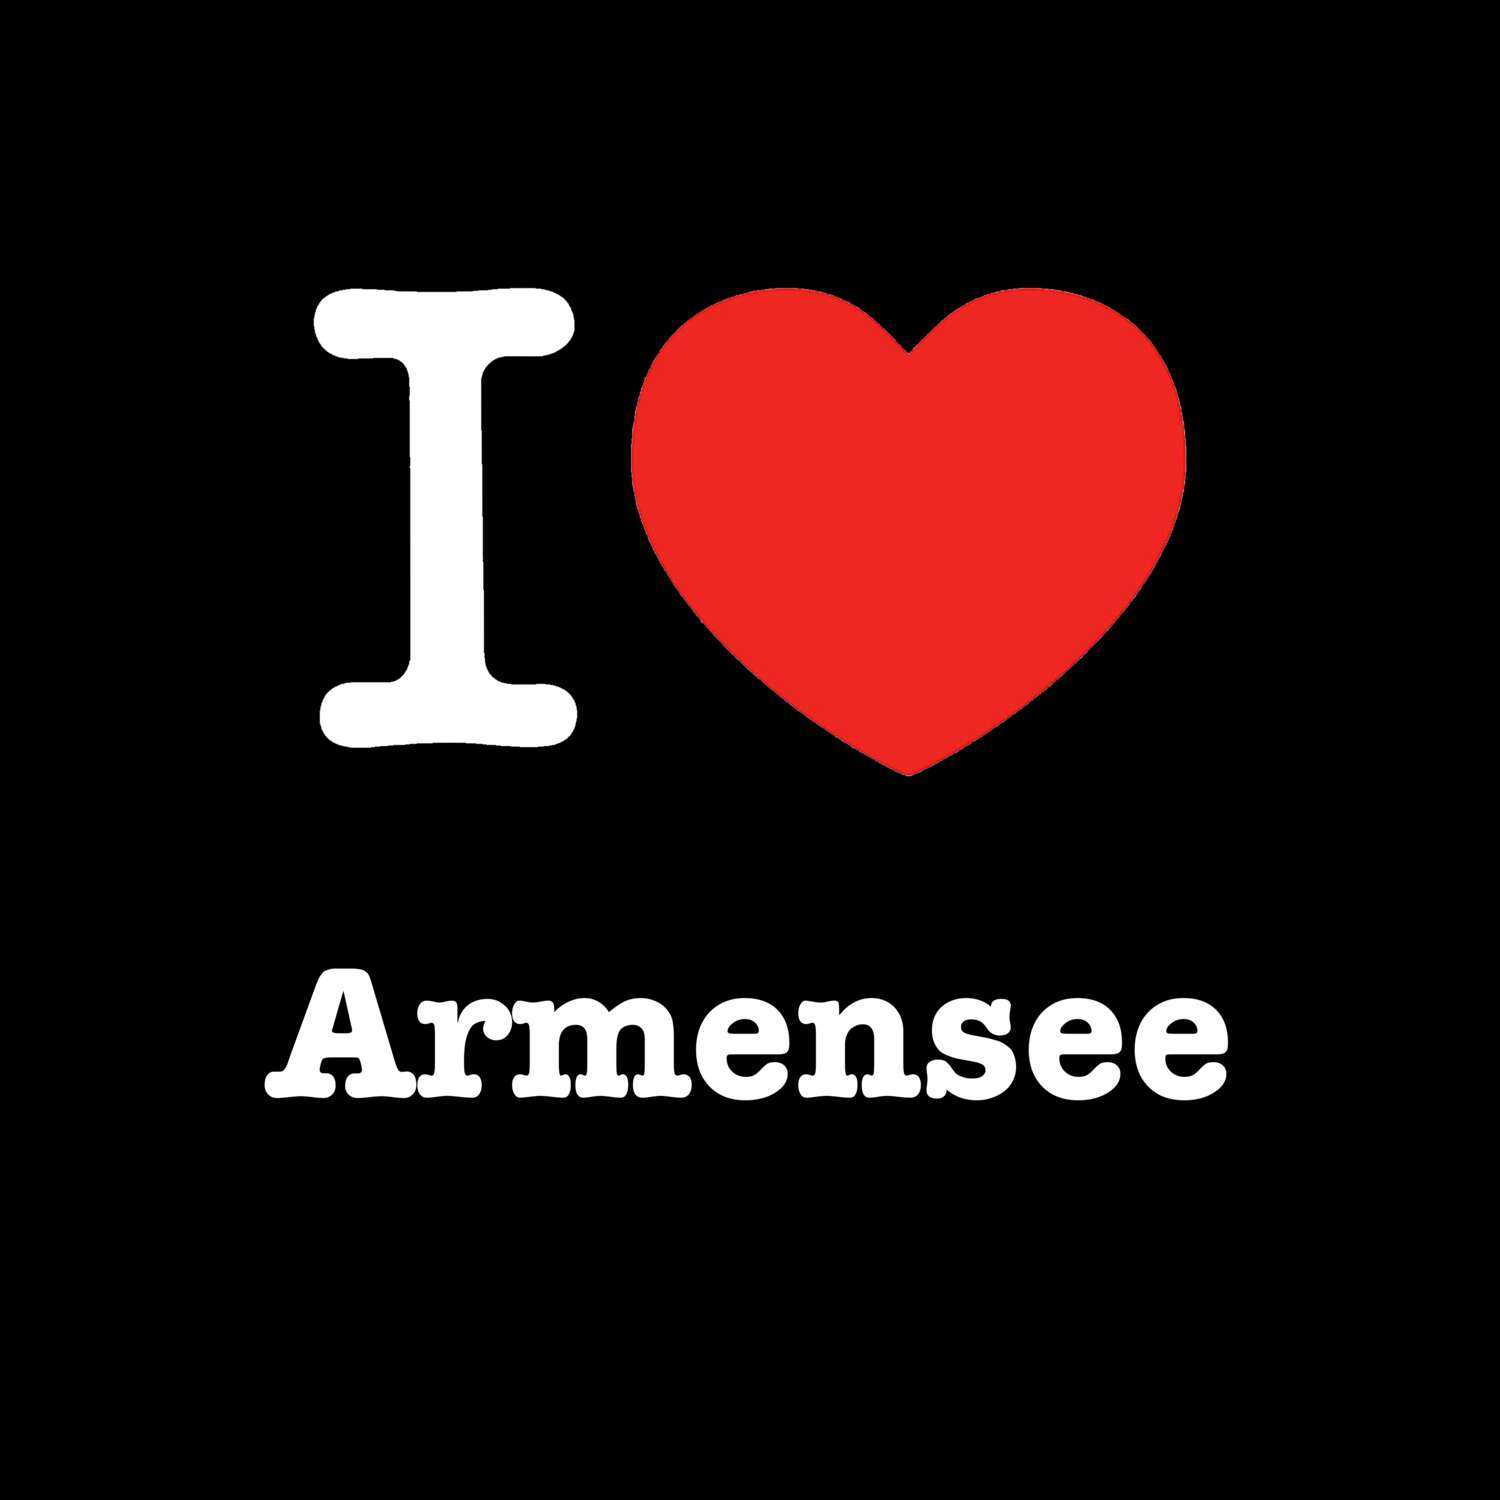 Armensee T-Shirt »I love«